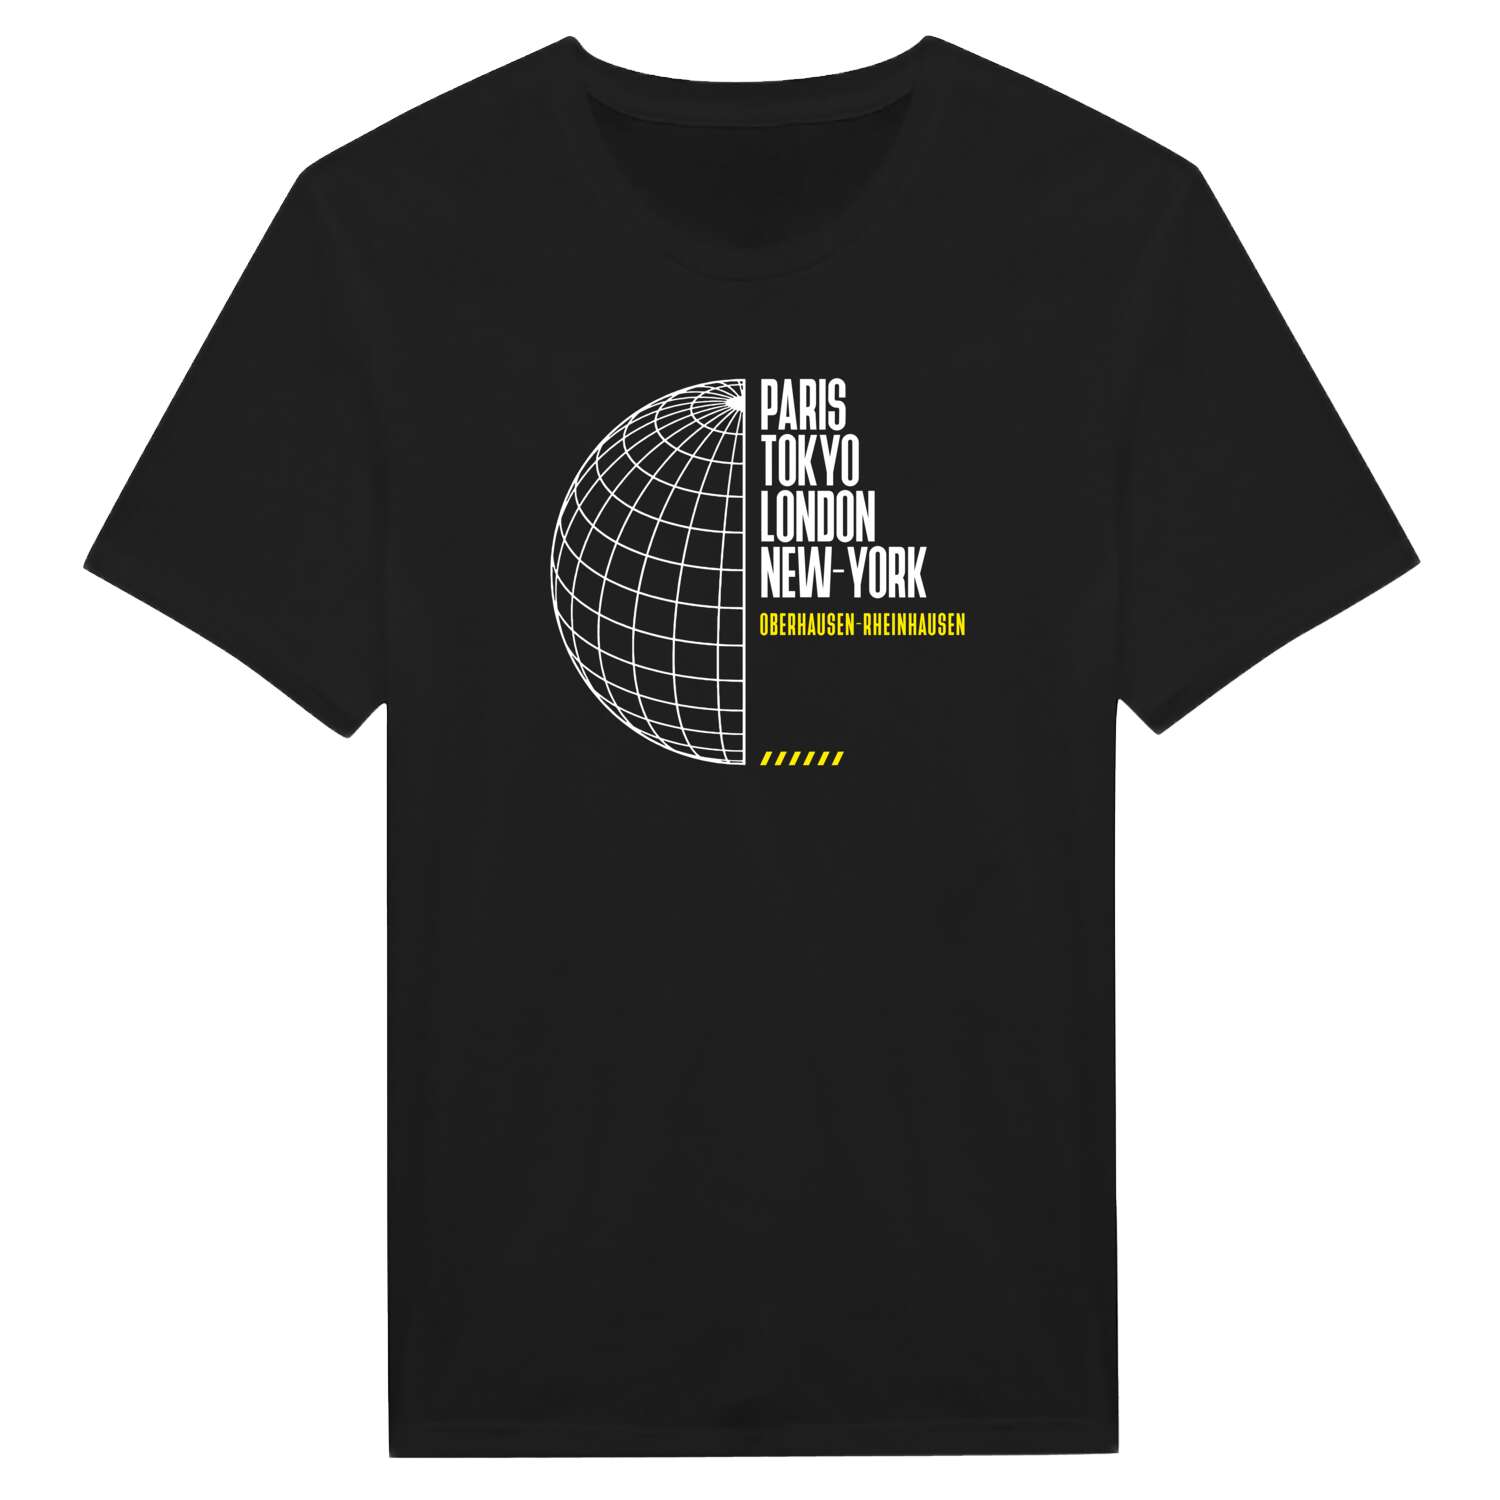 Oberhausen-Rheinhausen T-Shirt »Paris Tokyo London«